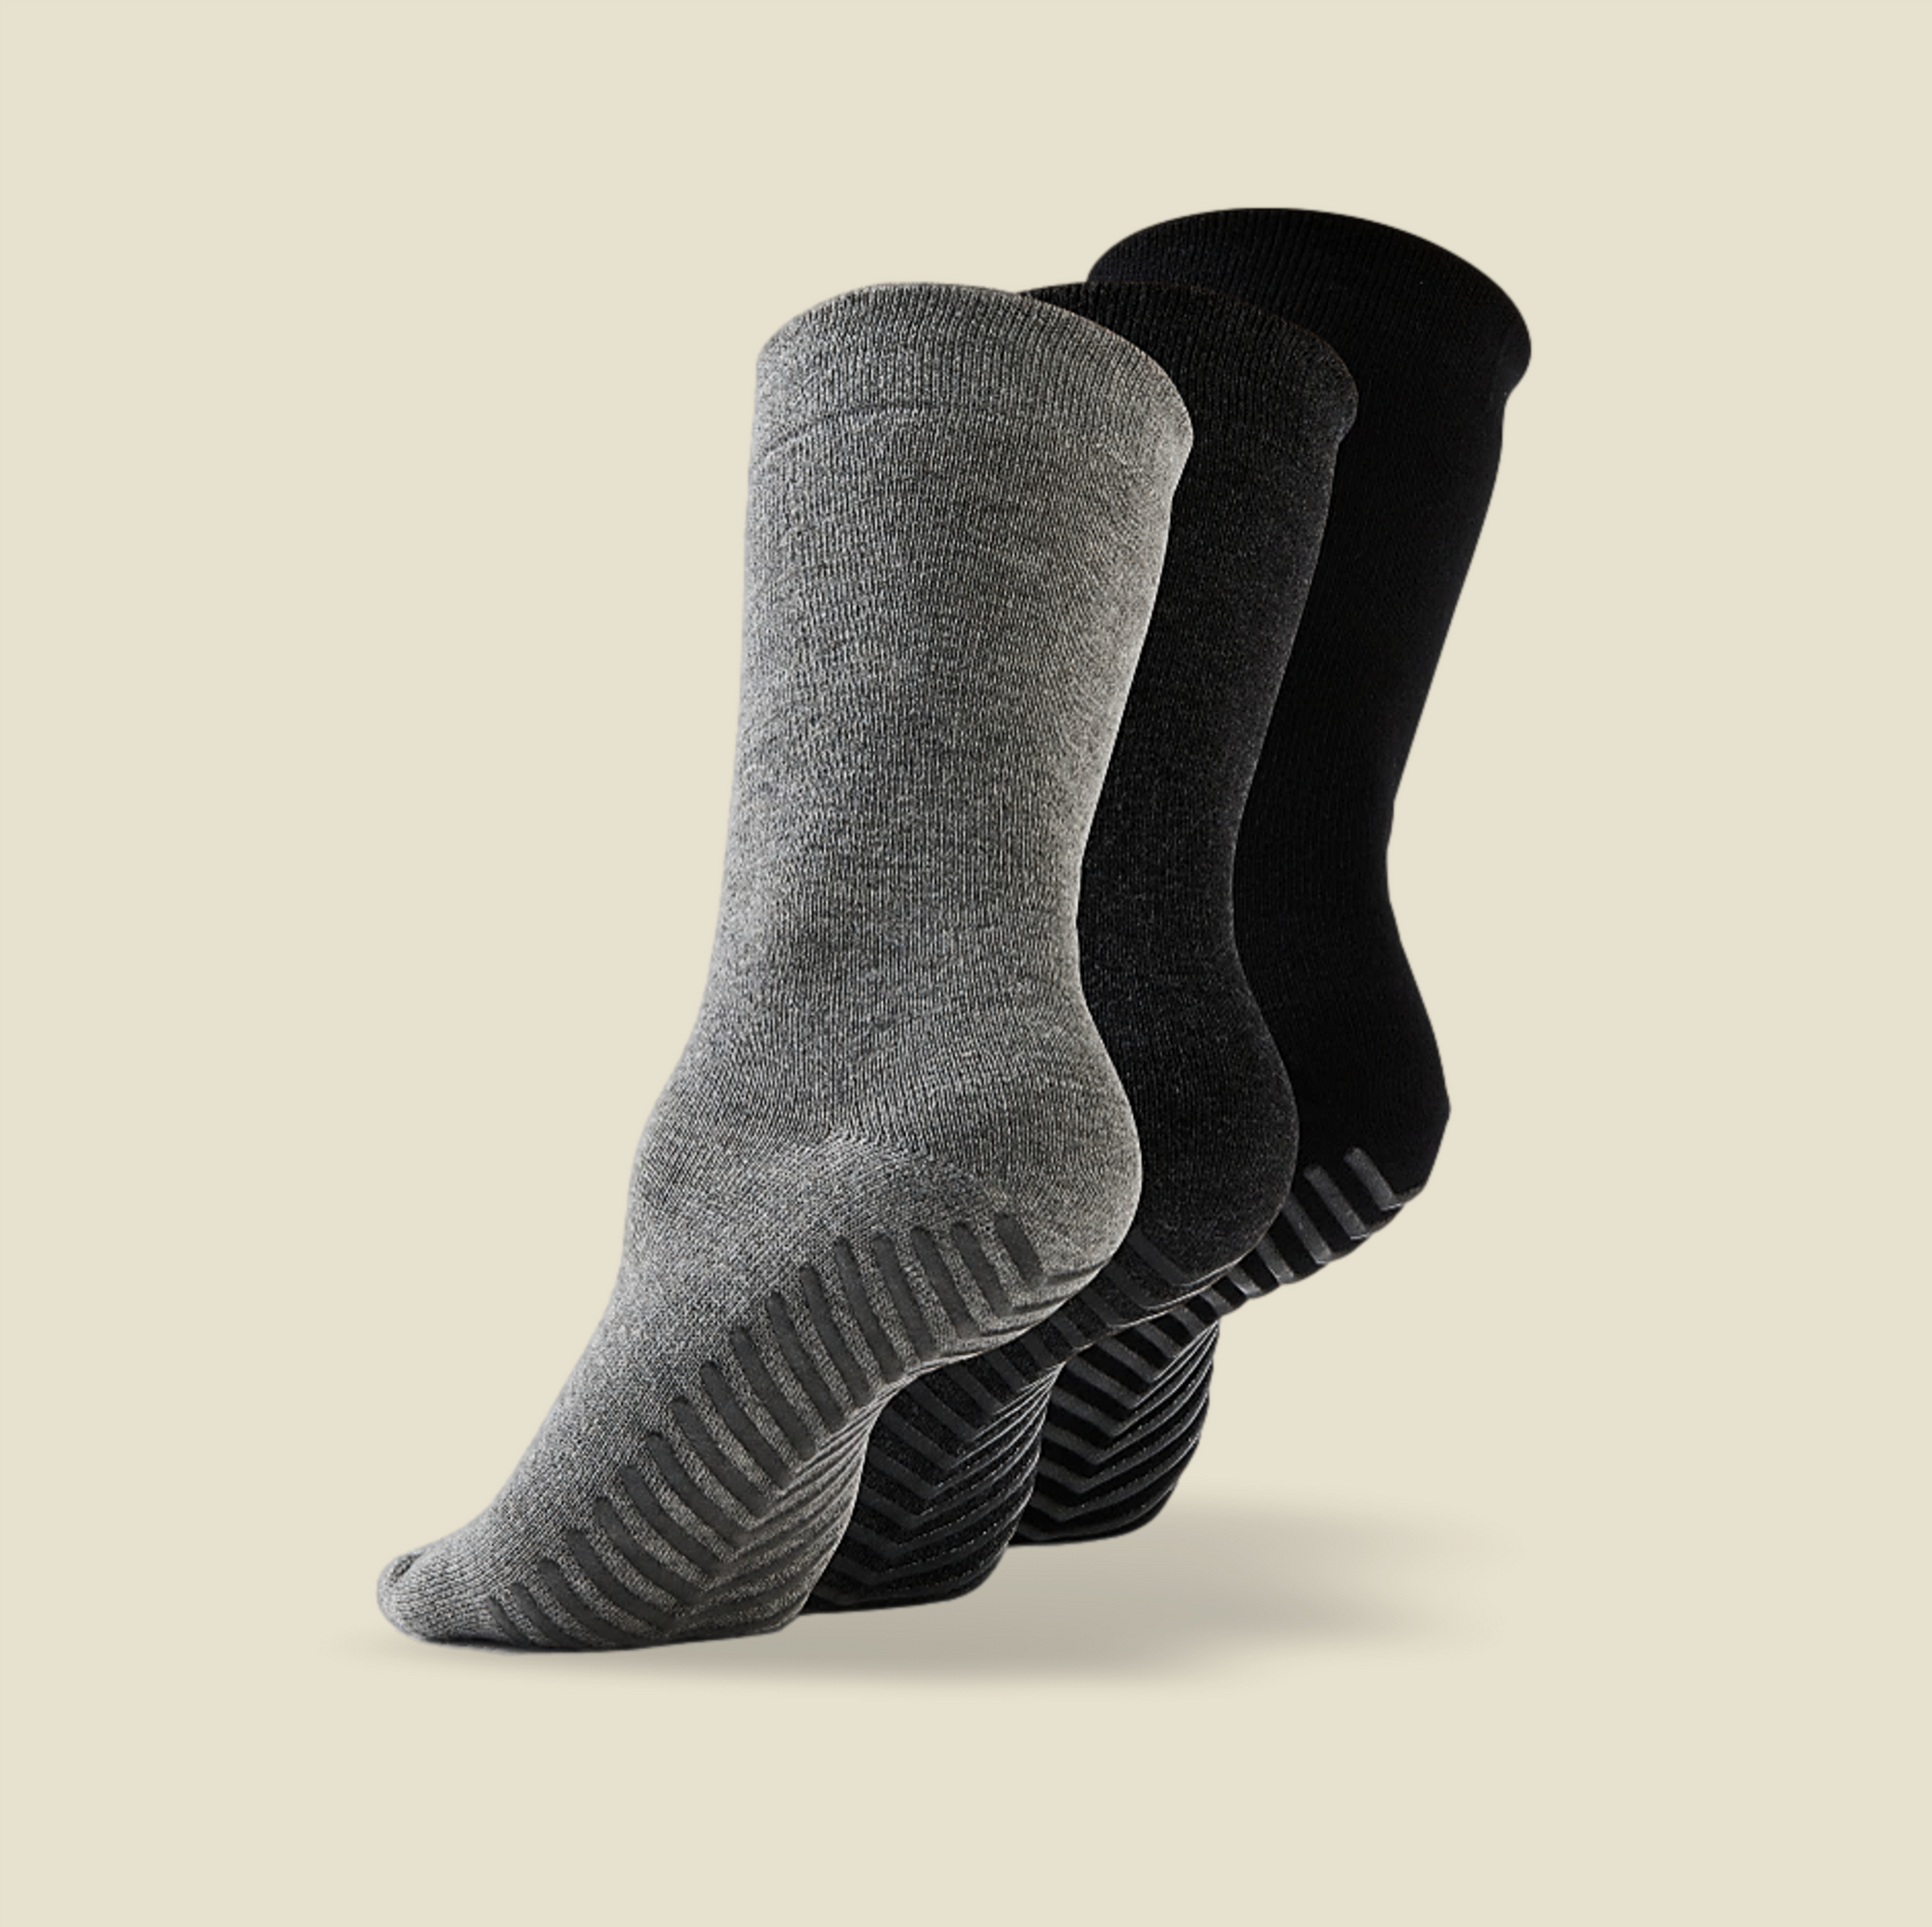 Men's Black/Grey Original Crew Non-Slip Socks - 3 pairs - Gripjoy Socks